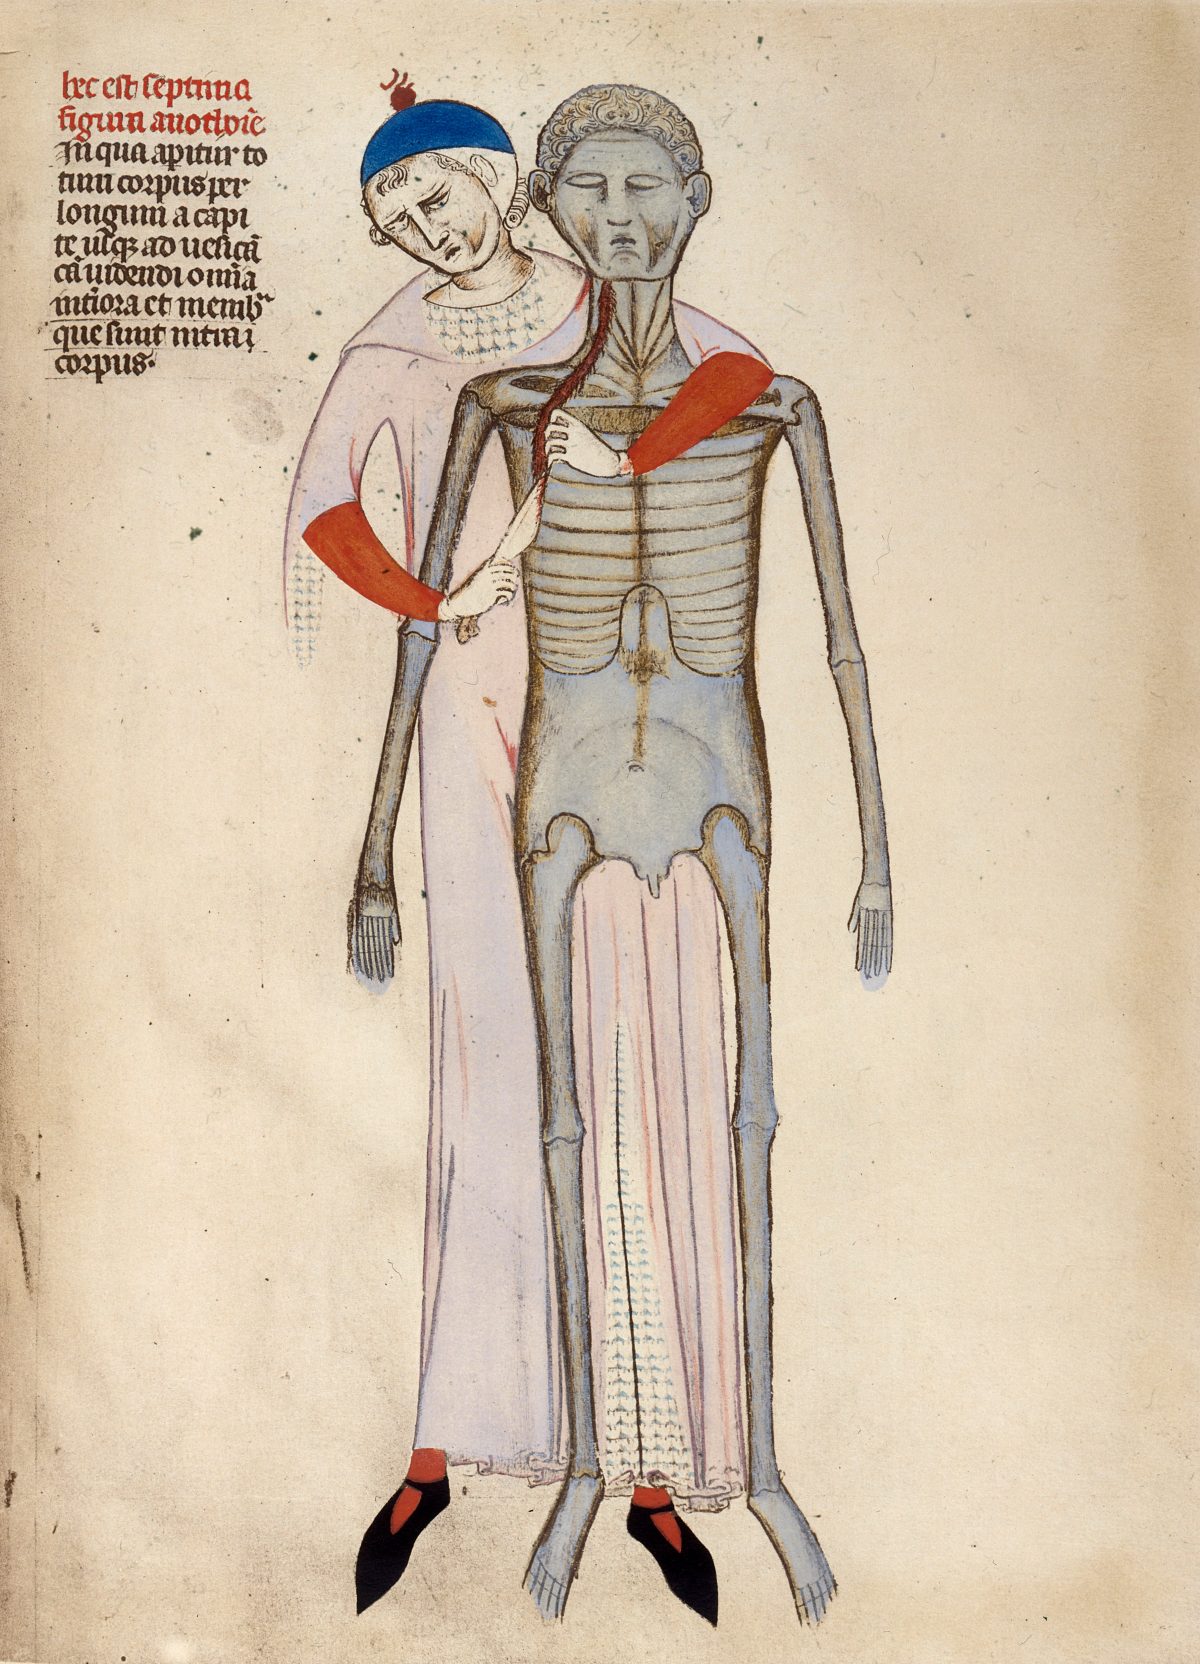 Anatomical plate from Guido de Vigevano